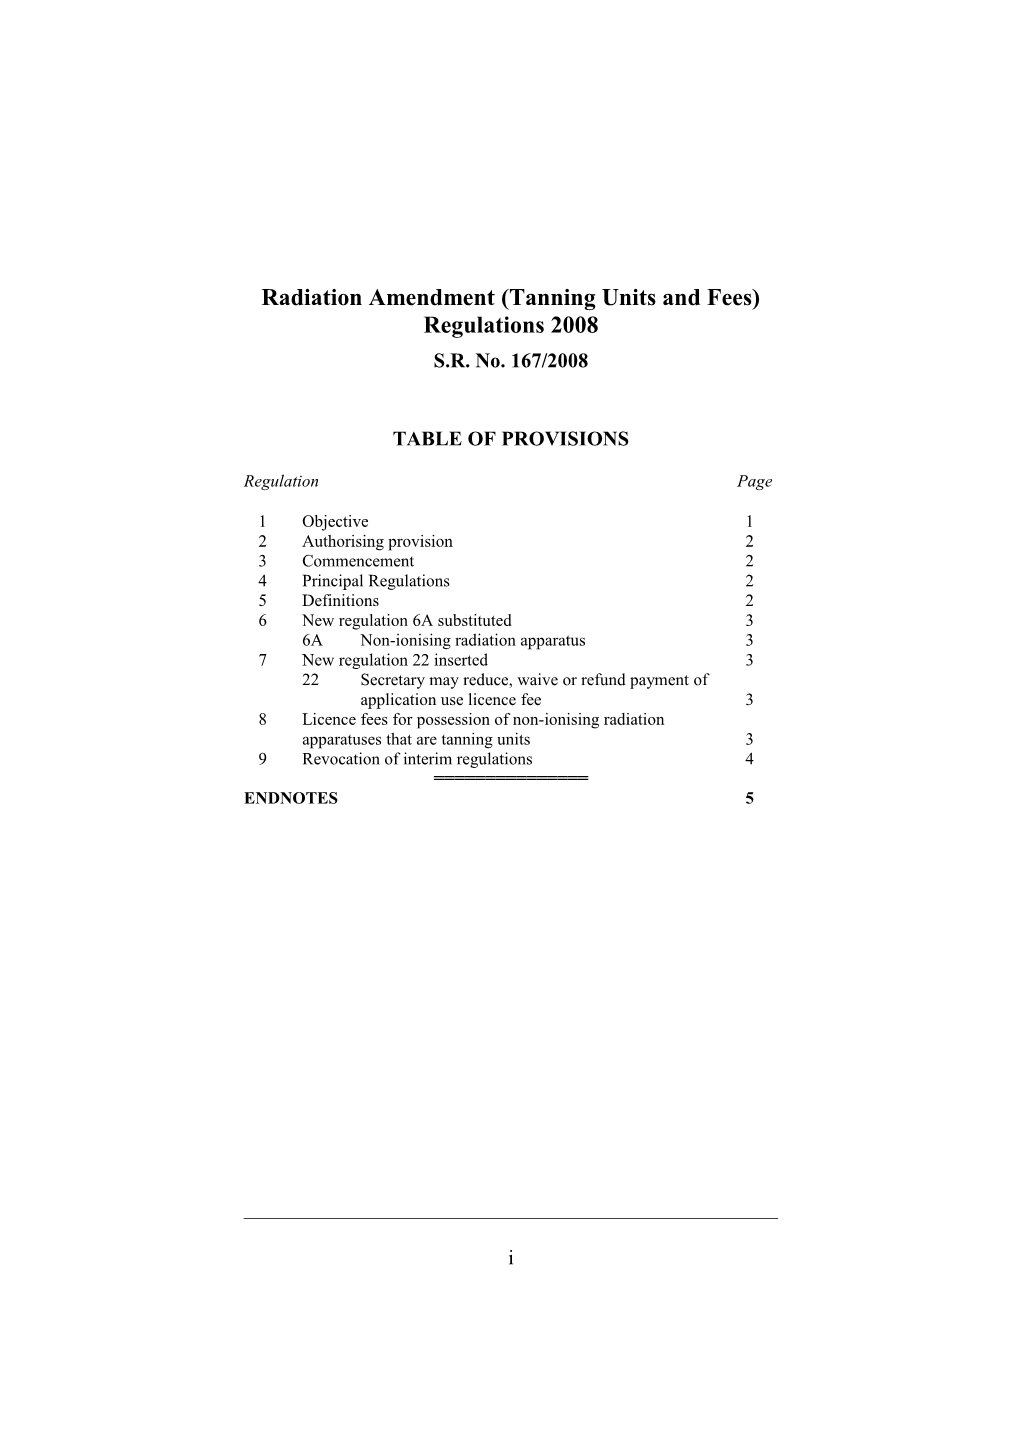 Radiation Amendment (Tanning Units and Fees) Regulations 2008